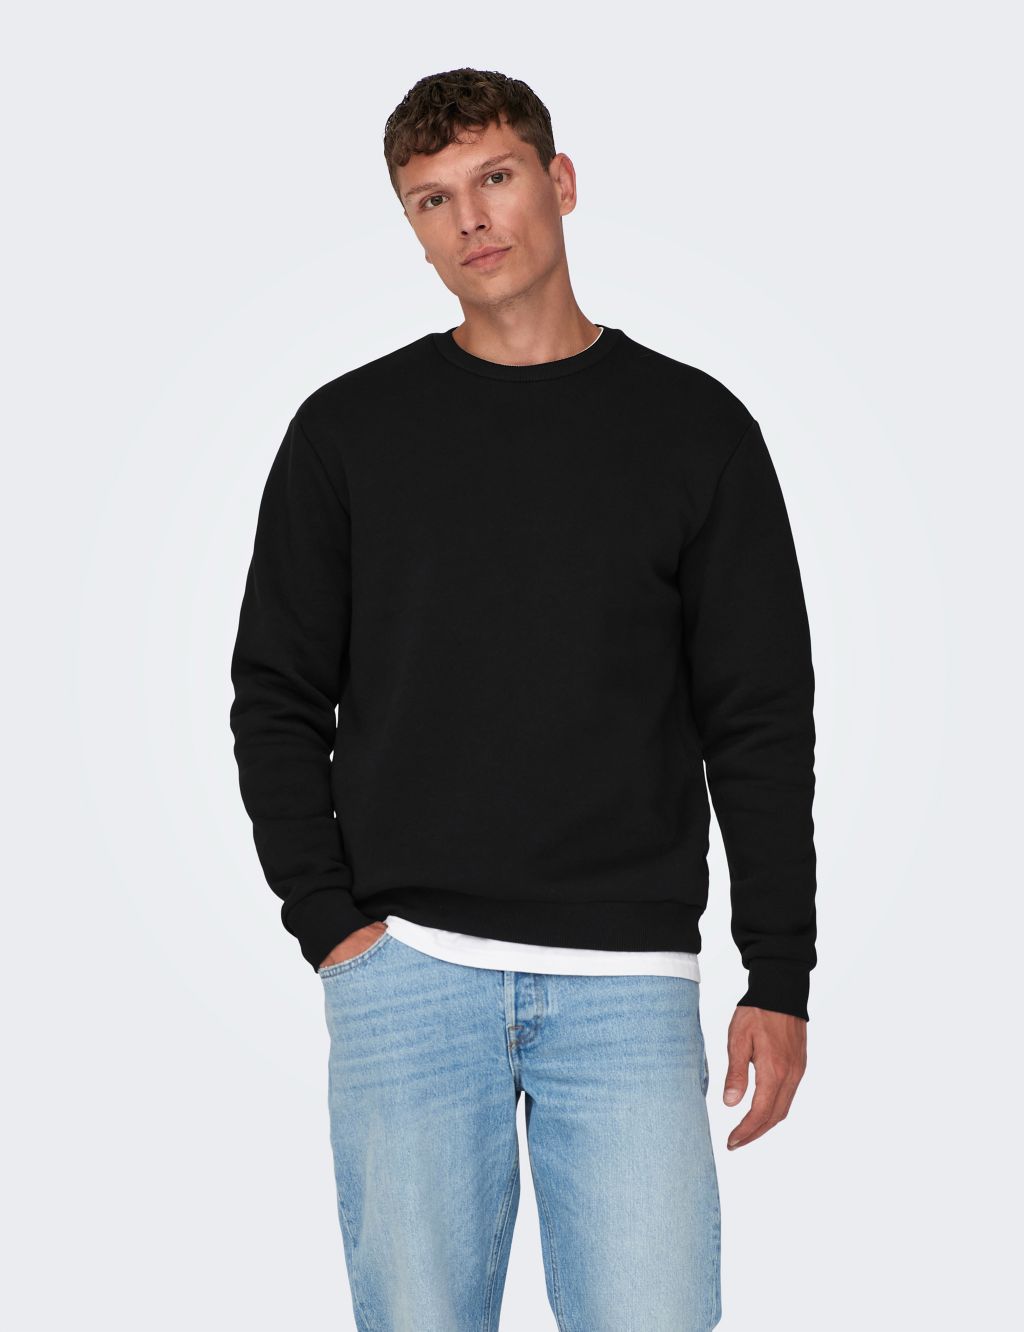 Cotton Rich Crew Neck Sweatshirt image 1